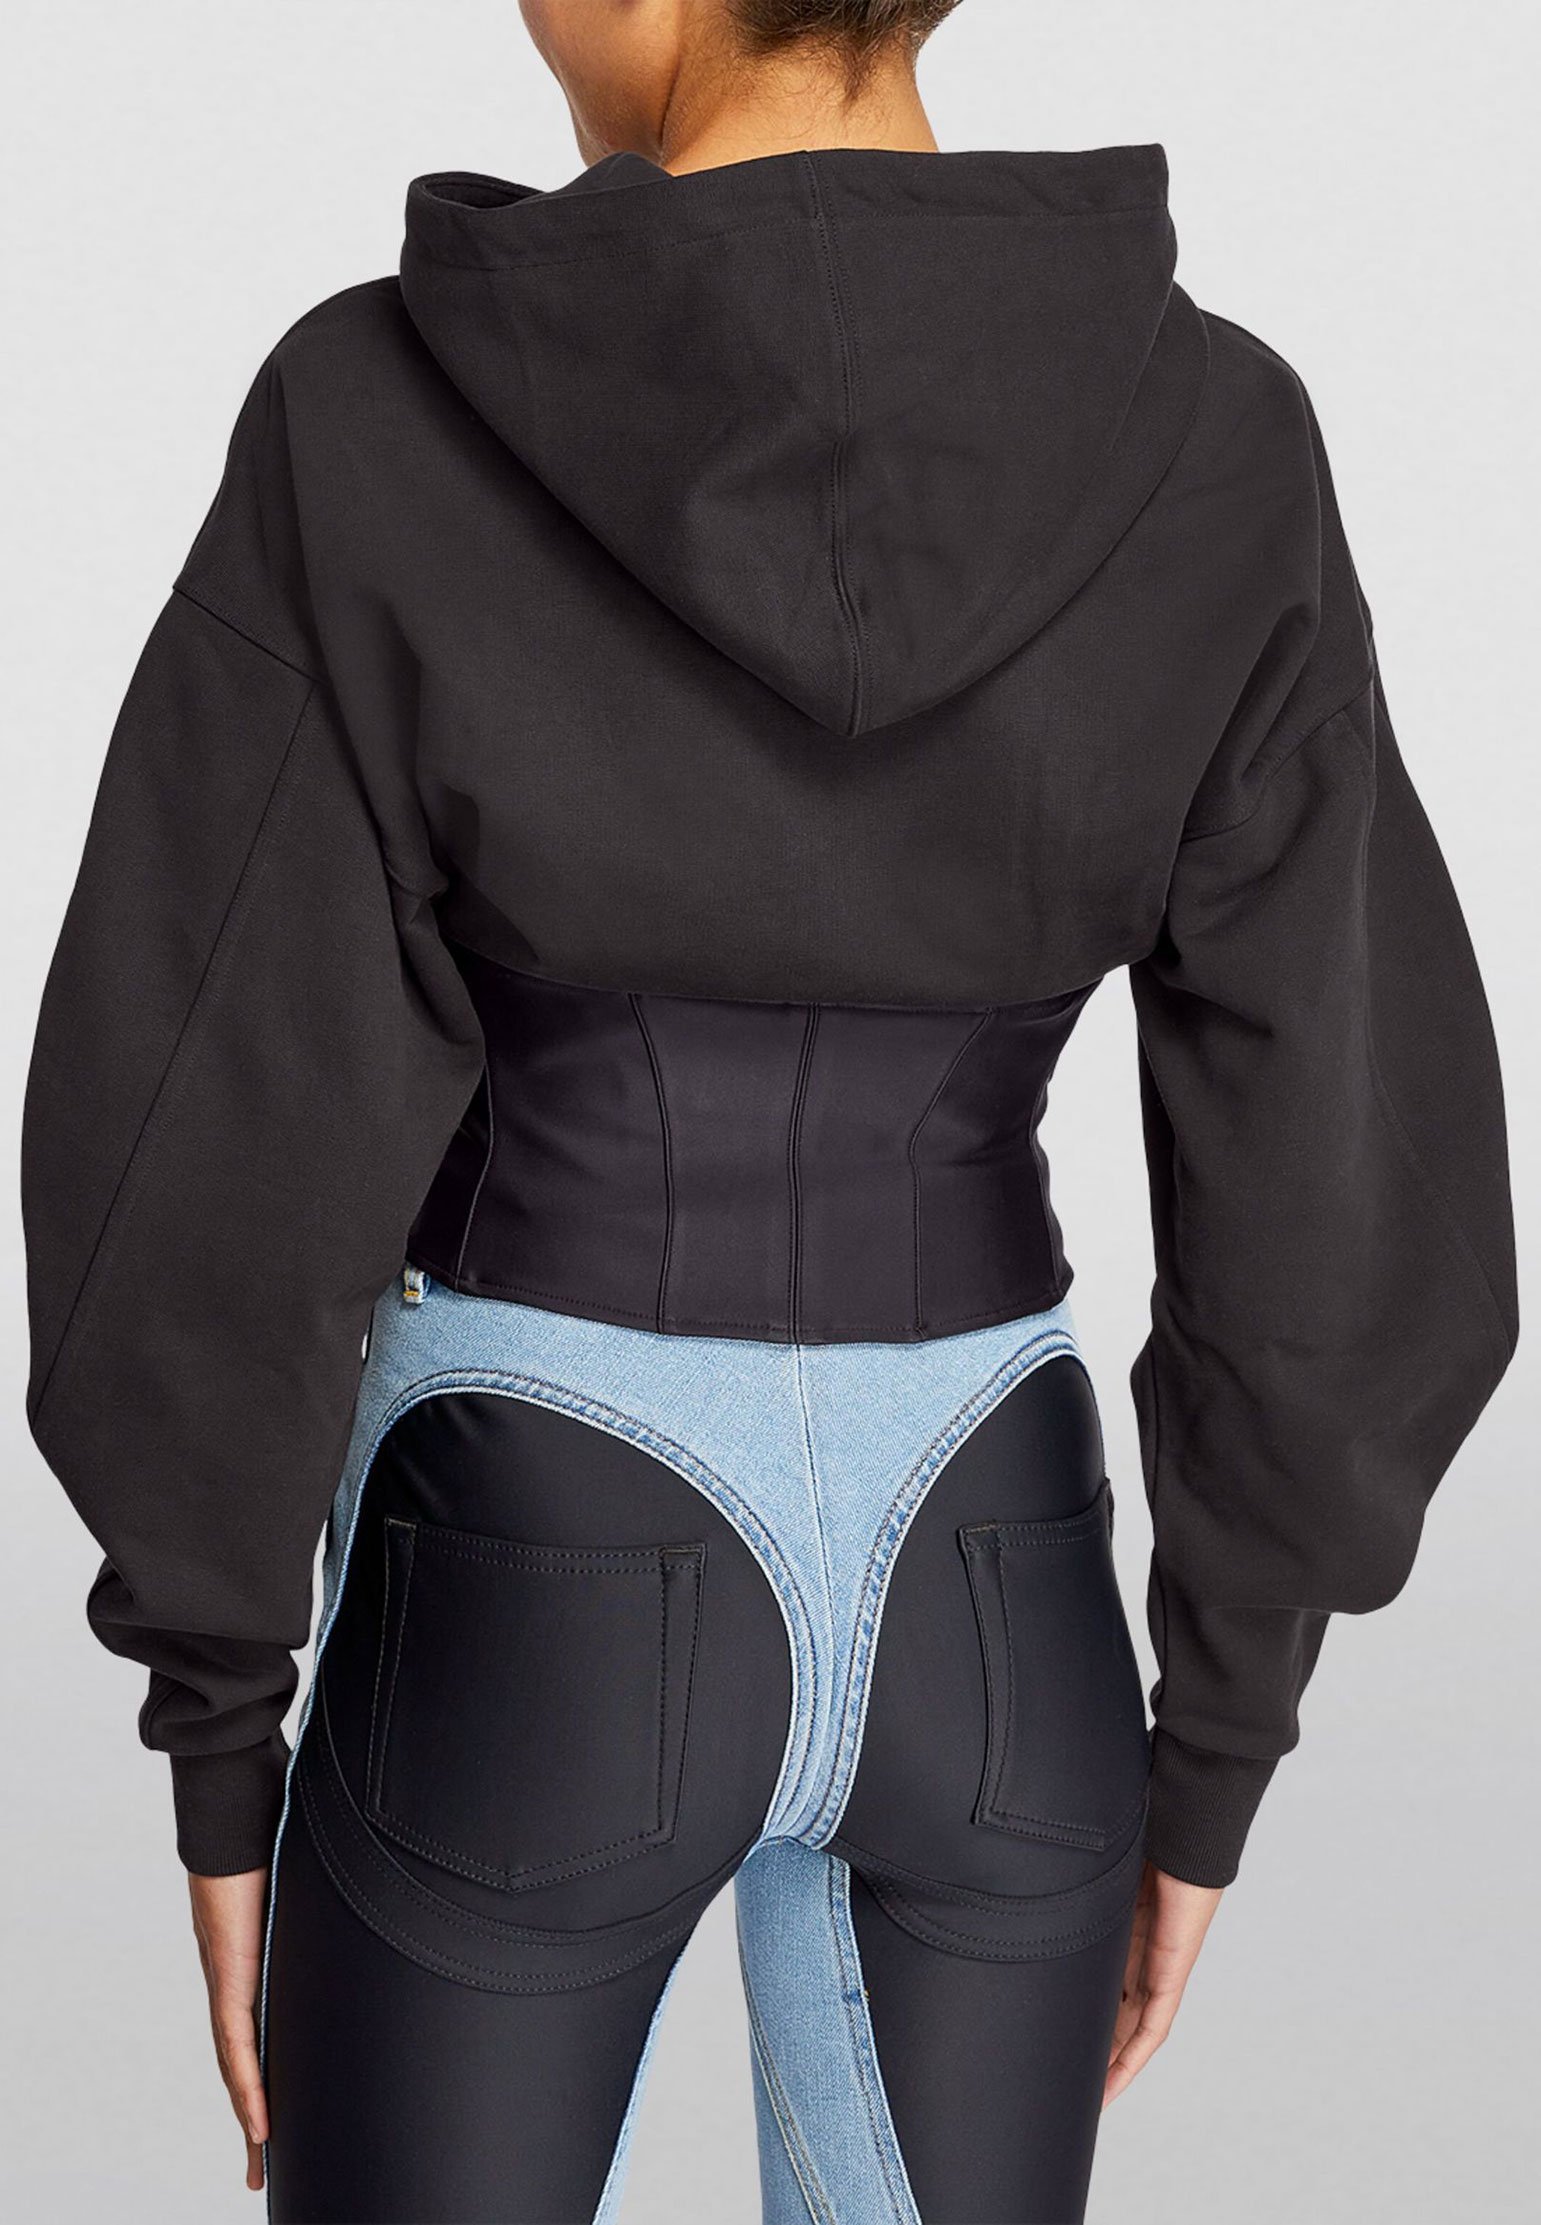 Sweater MUGLER Color: black (Code: 4048) in online store Allure